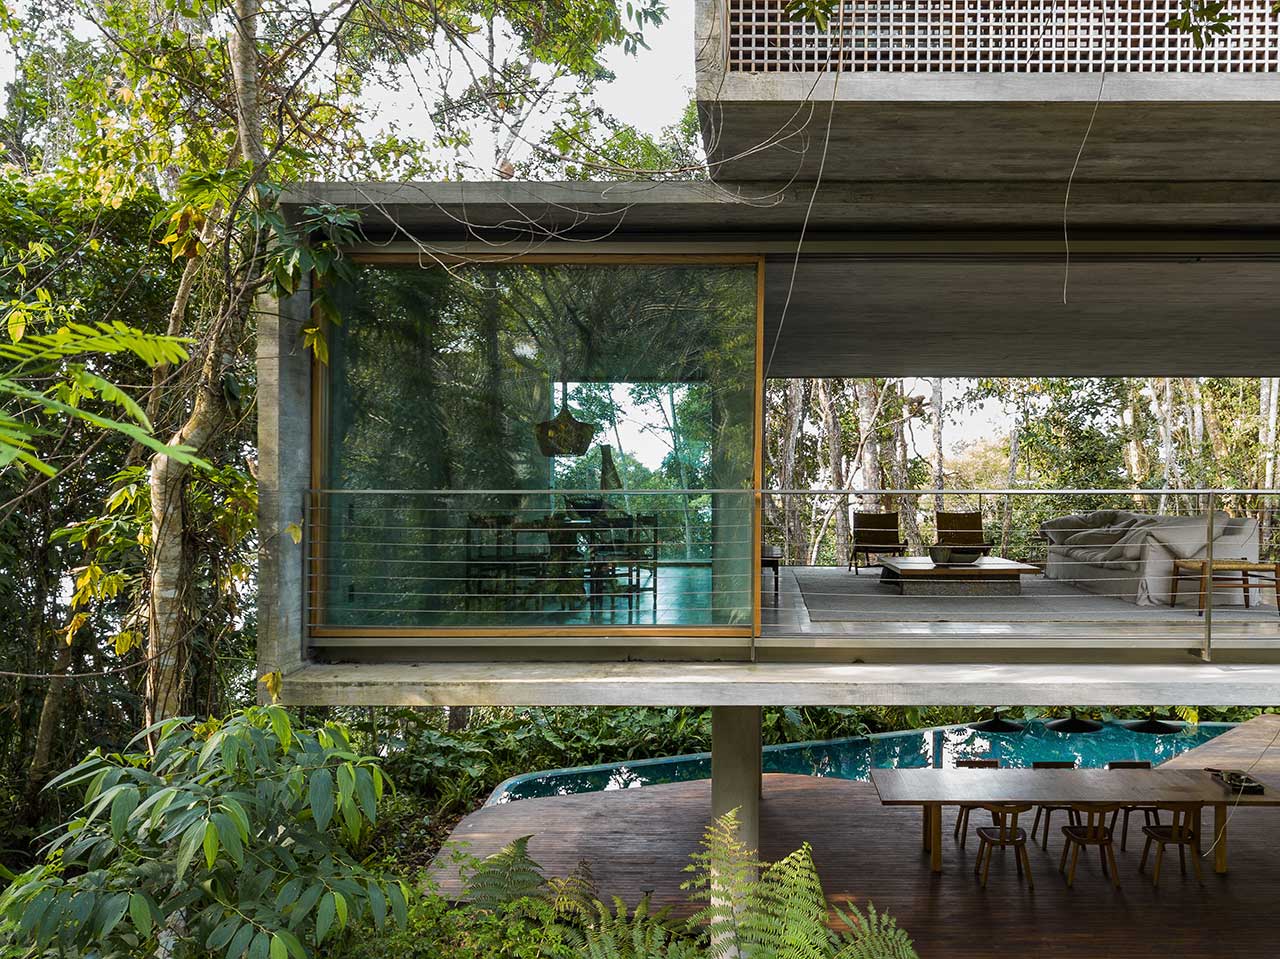 Casa Azul Is a Raised Concrete Home in a Brazilian Forest